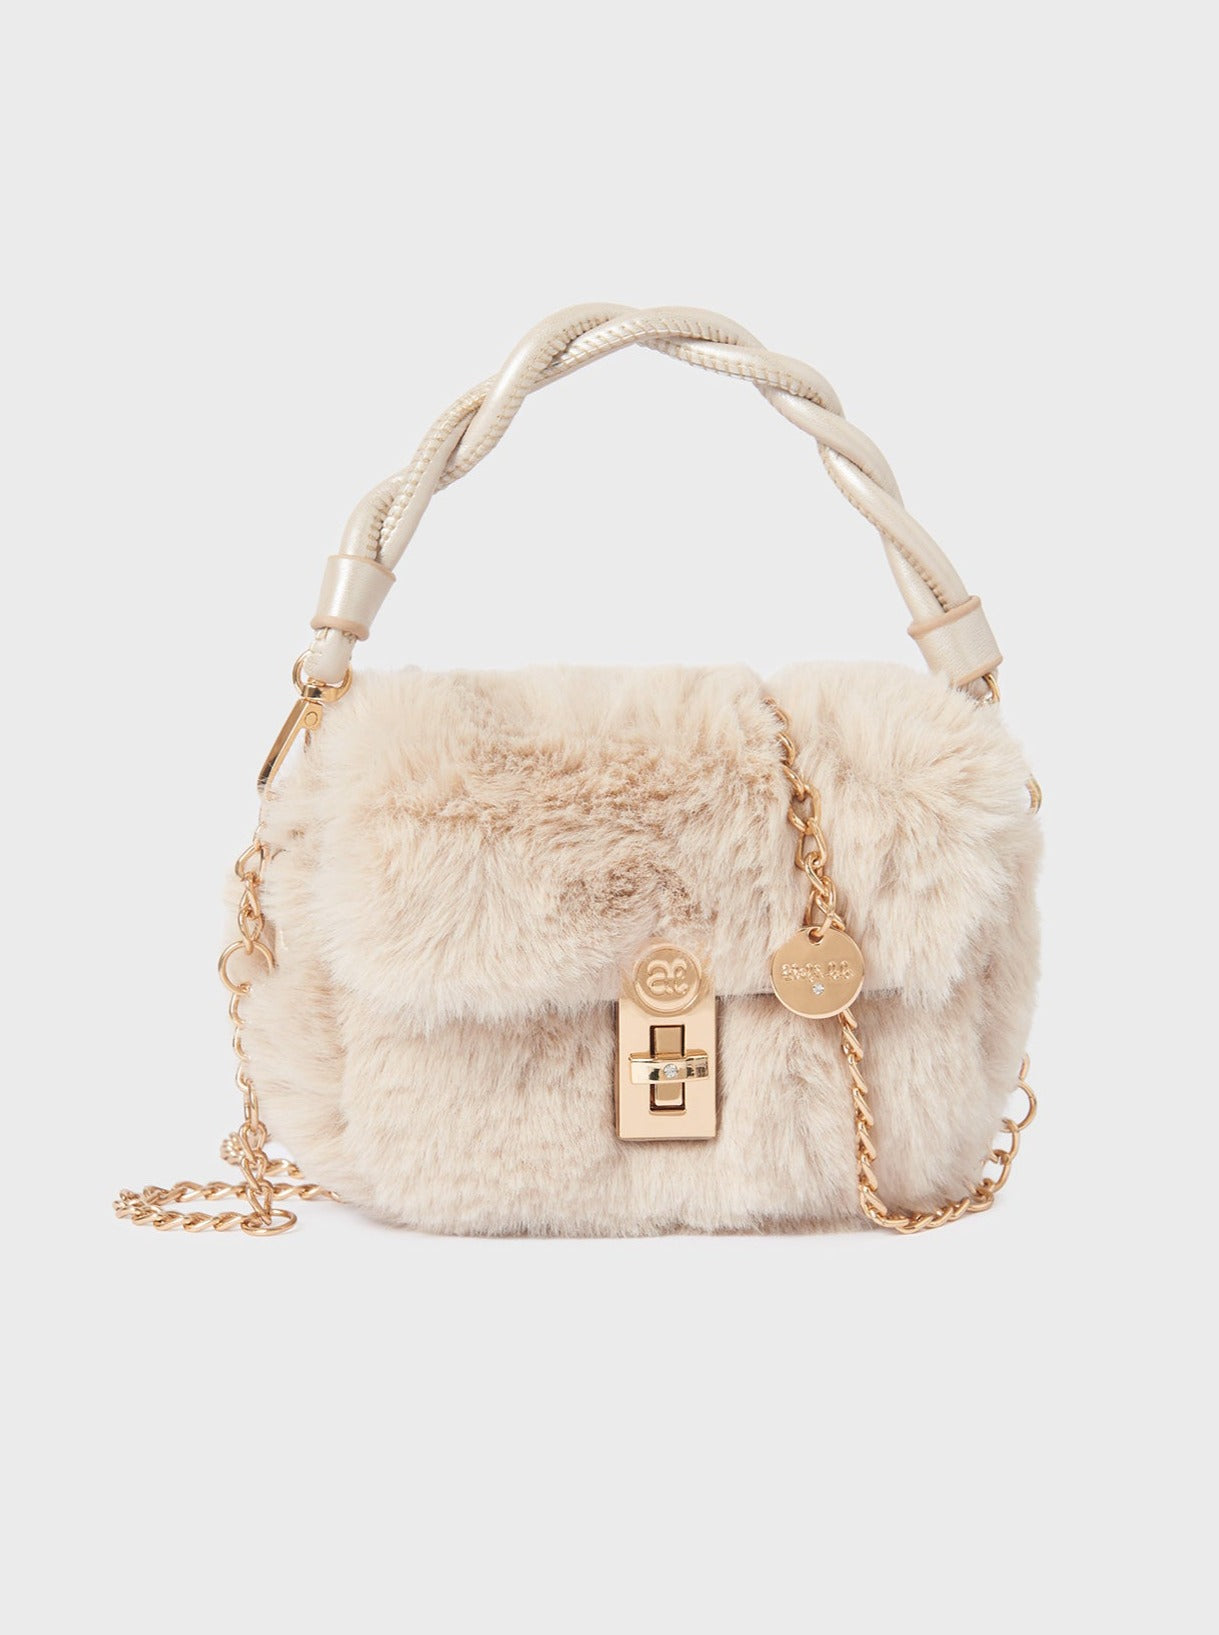 Tote Purse Furry Bag Peach Heart Style Faux Fur Crossbody Bag Luxury Soild  New | eBay